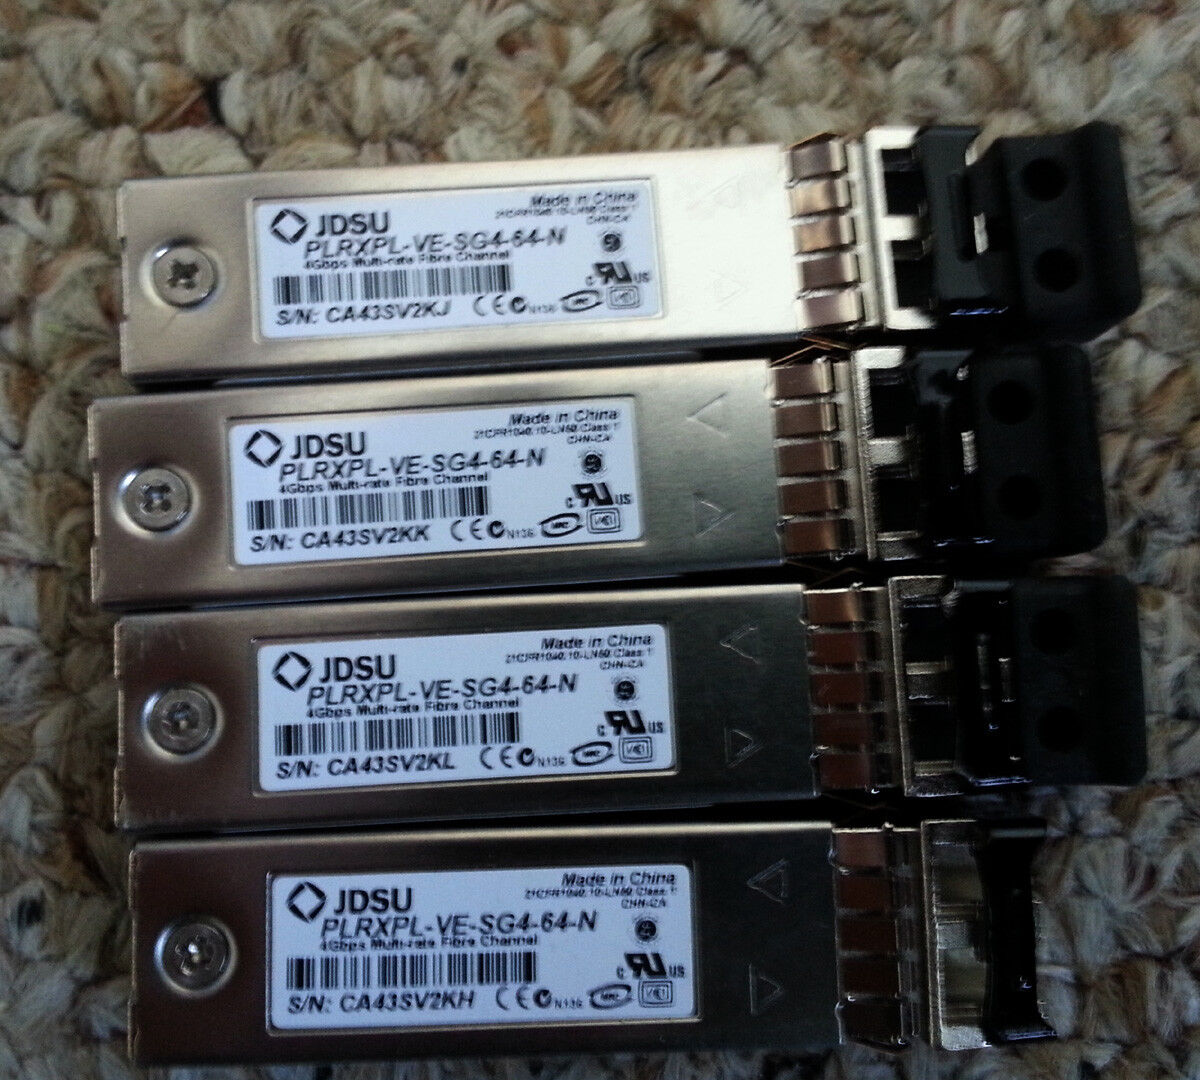 Lot of 4 JDSU PLRXPL-VE-SG4-64-N 4Gbps Multi-Rate Fibre Channel SFP